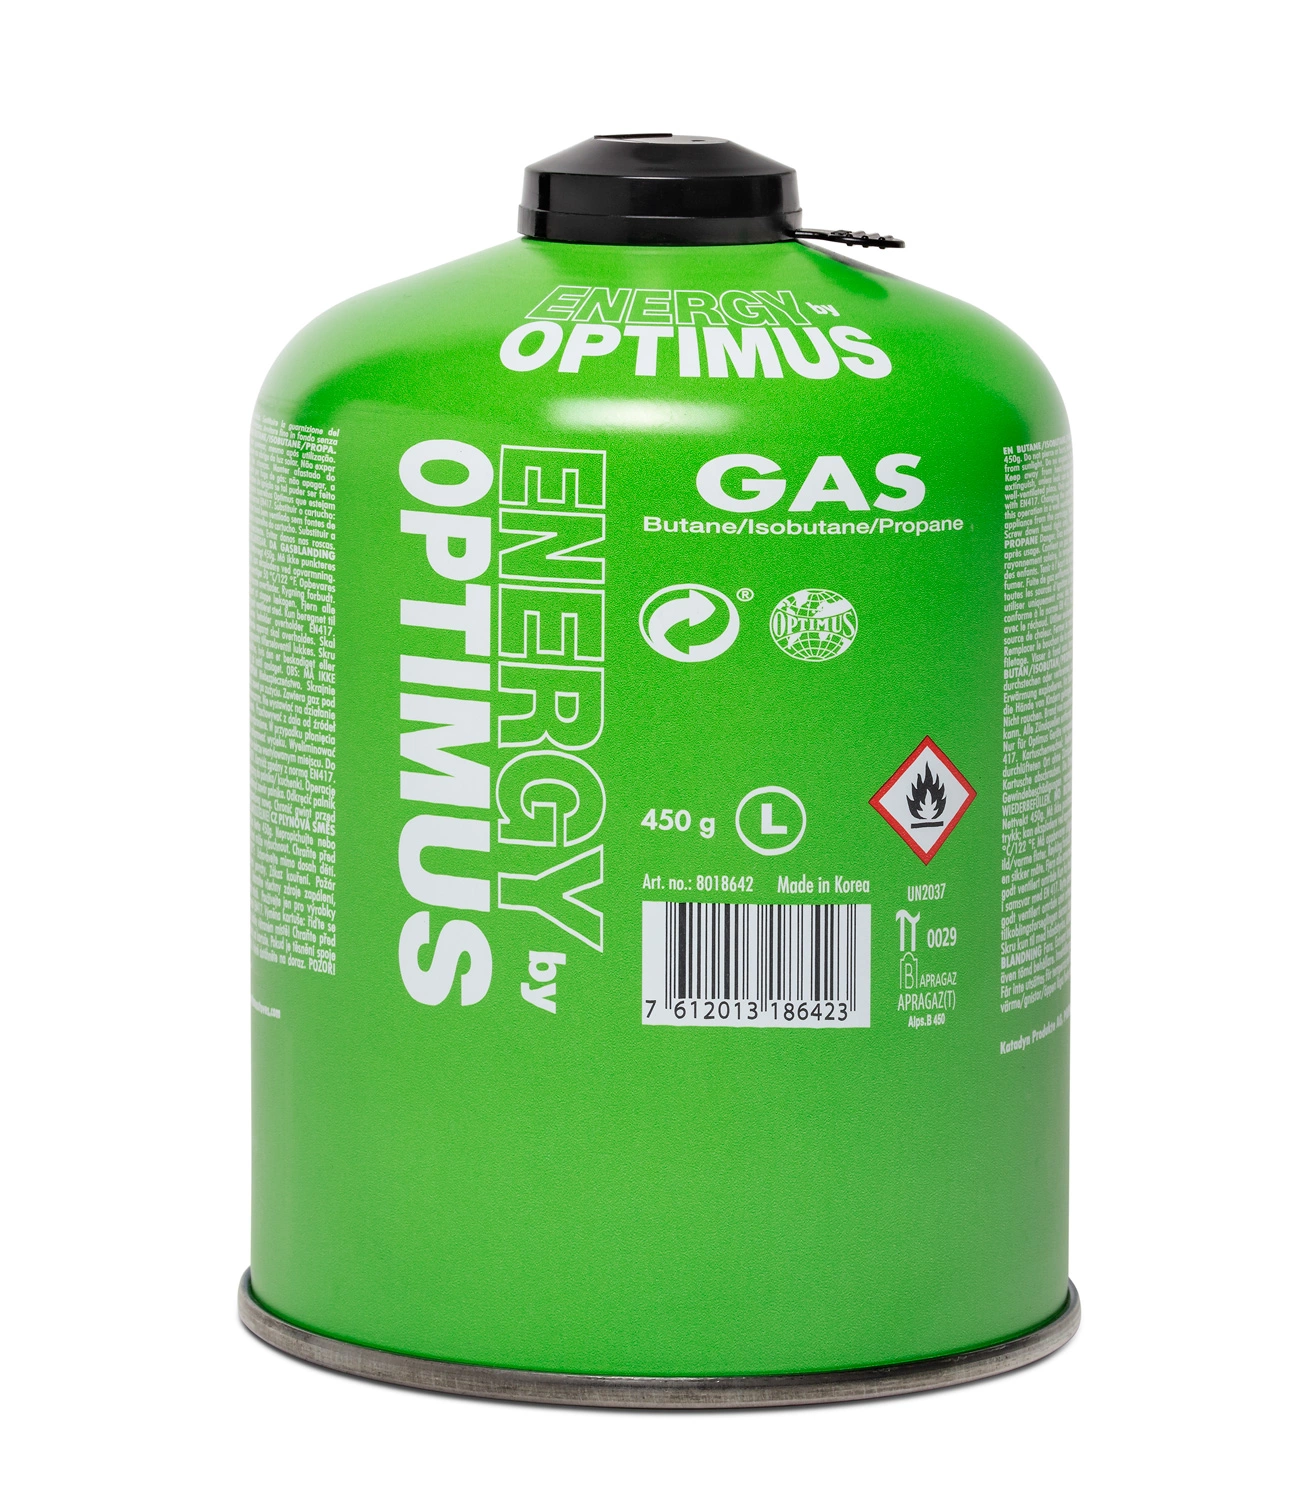 Optimus Gaskartuschen - Butan, Isobutan, Propan